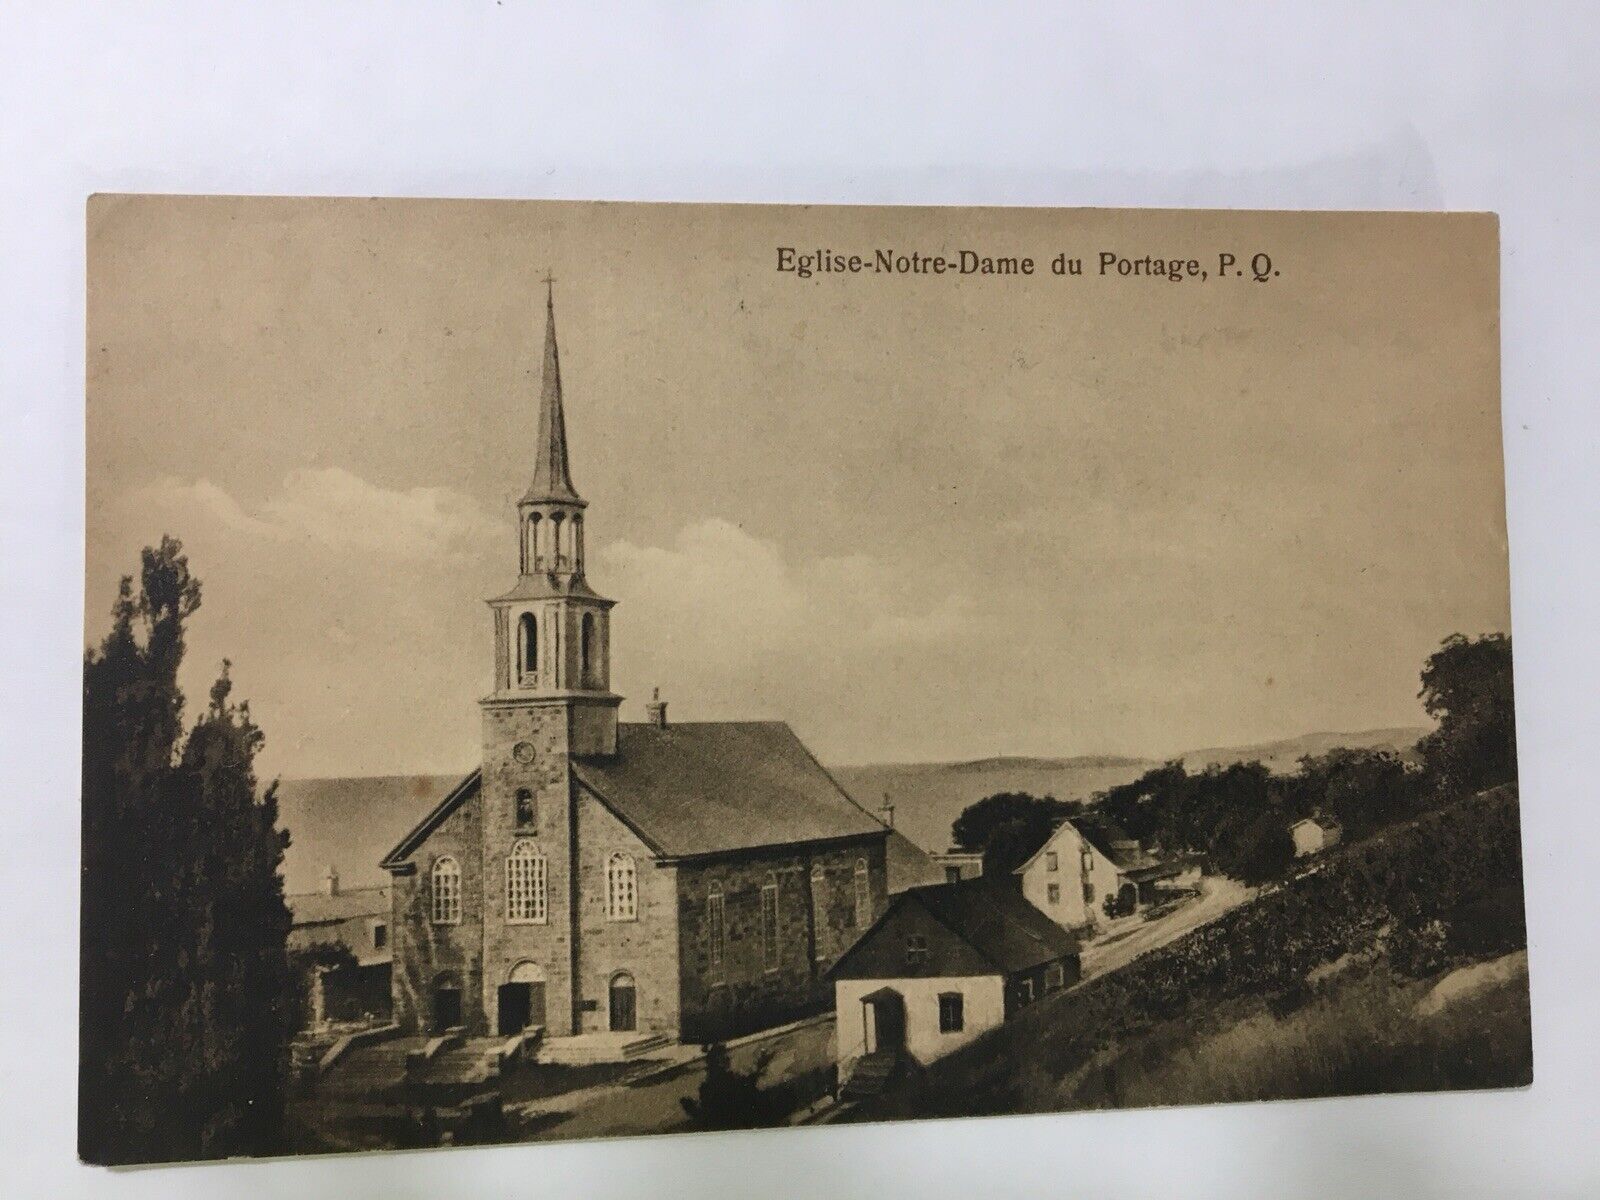 Eglise-Notre-Dame postcard antique Montreal Quebec Canada Portage Etched Unused